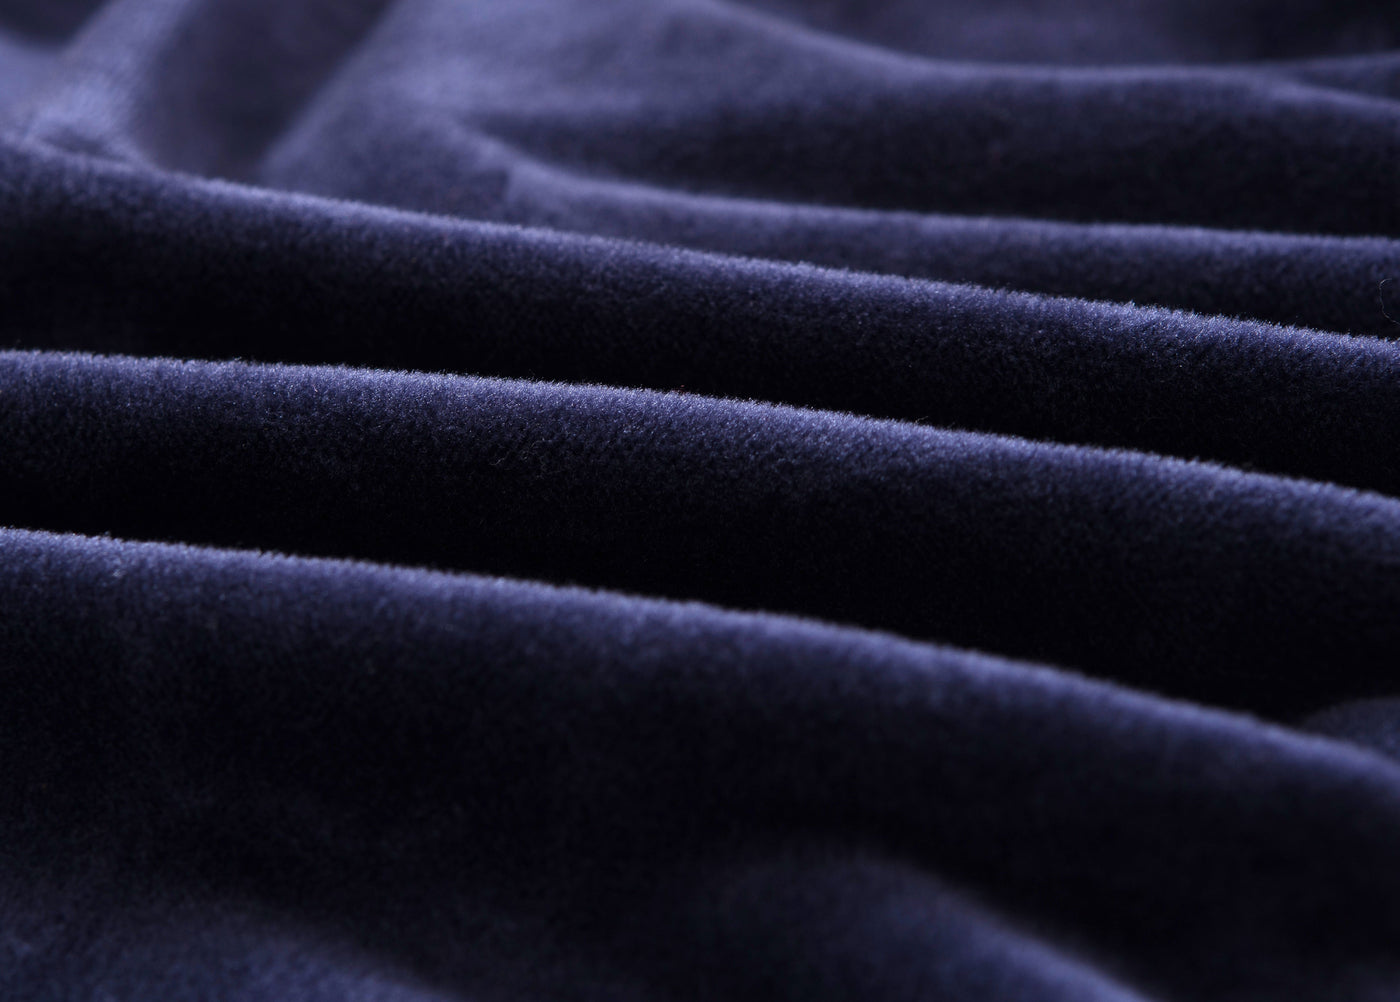 Plush Sofa Slipcover - Dark Blue